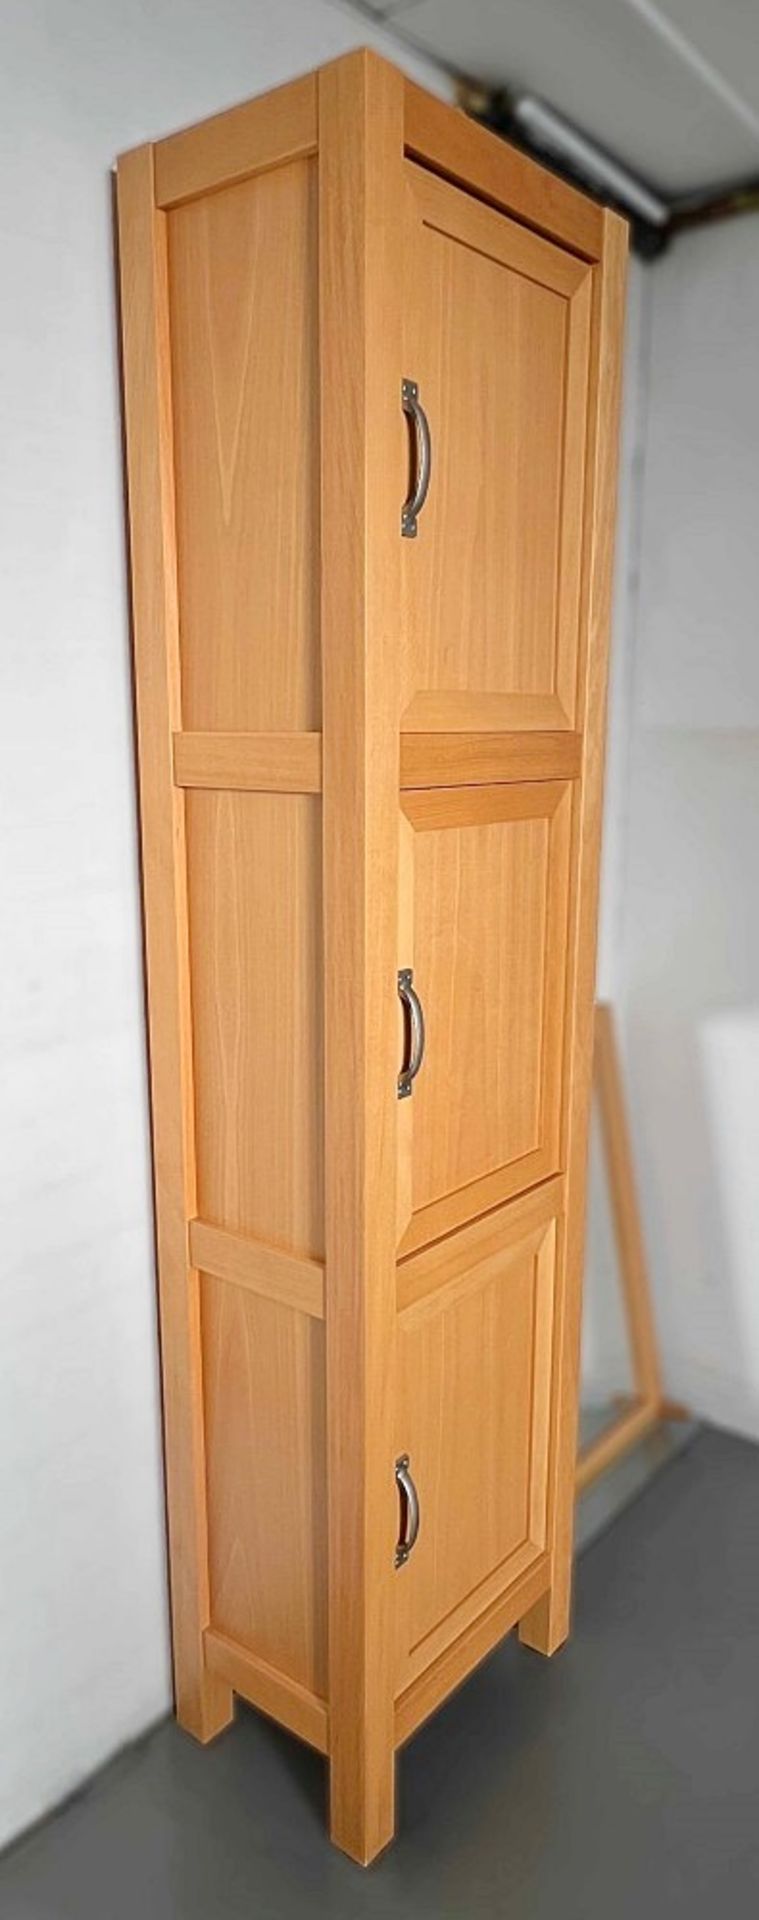 1 x VILLEROY & BOCH 3-Door Tallboy Bathroom Storage Cabinet With Matching Mirror - NO VAT ON THE - Image 2 of 5